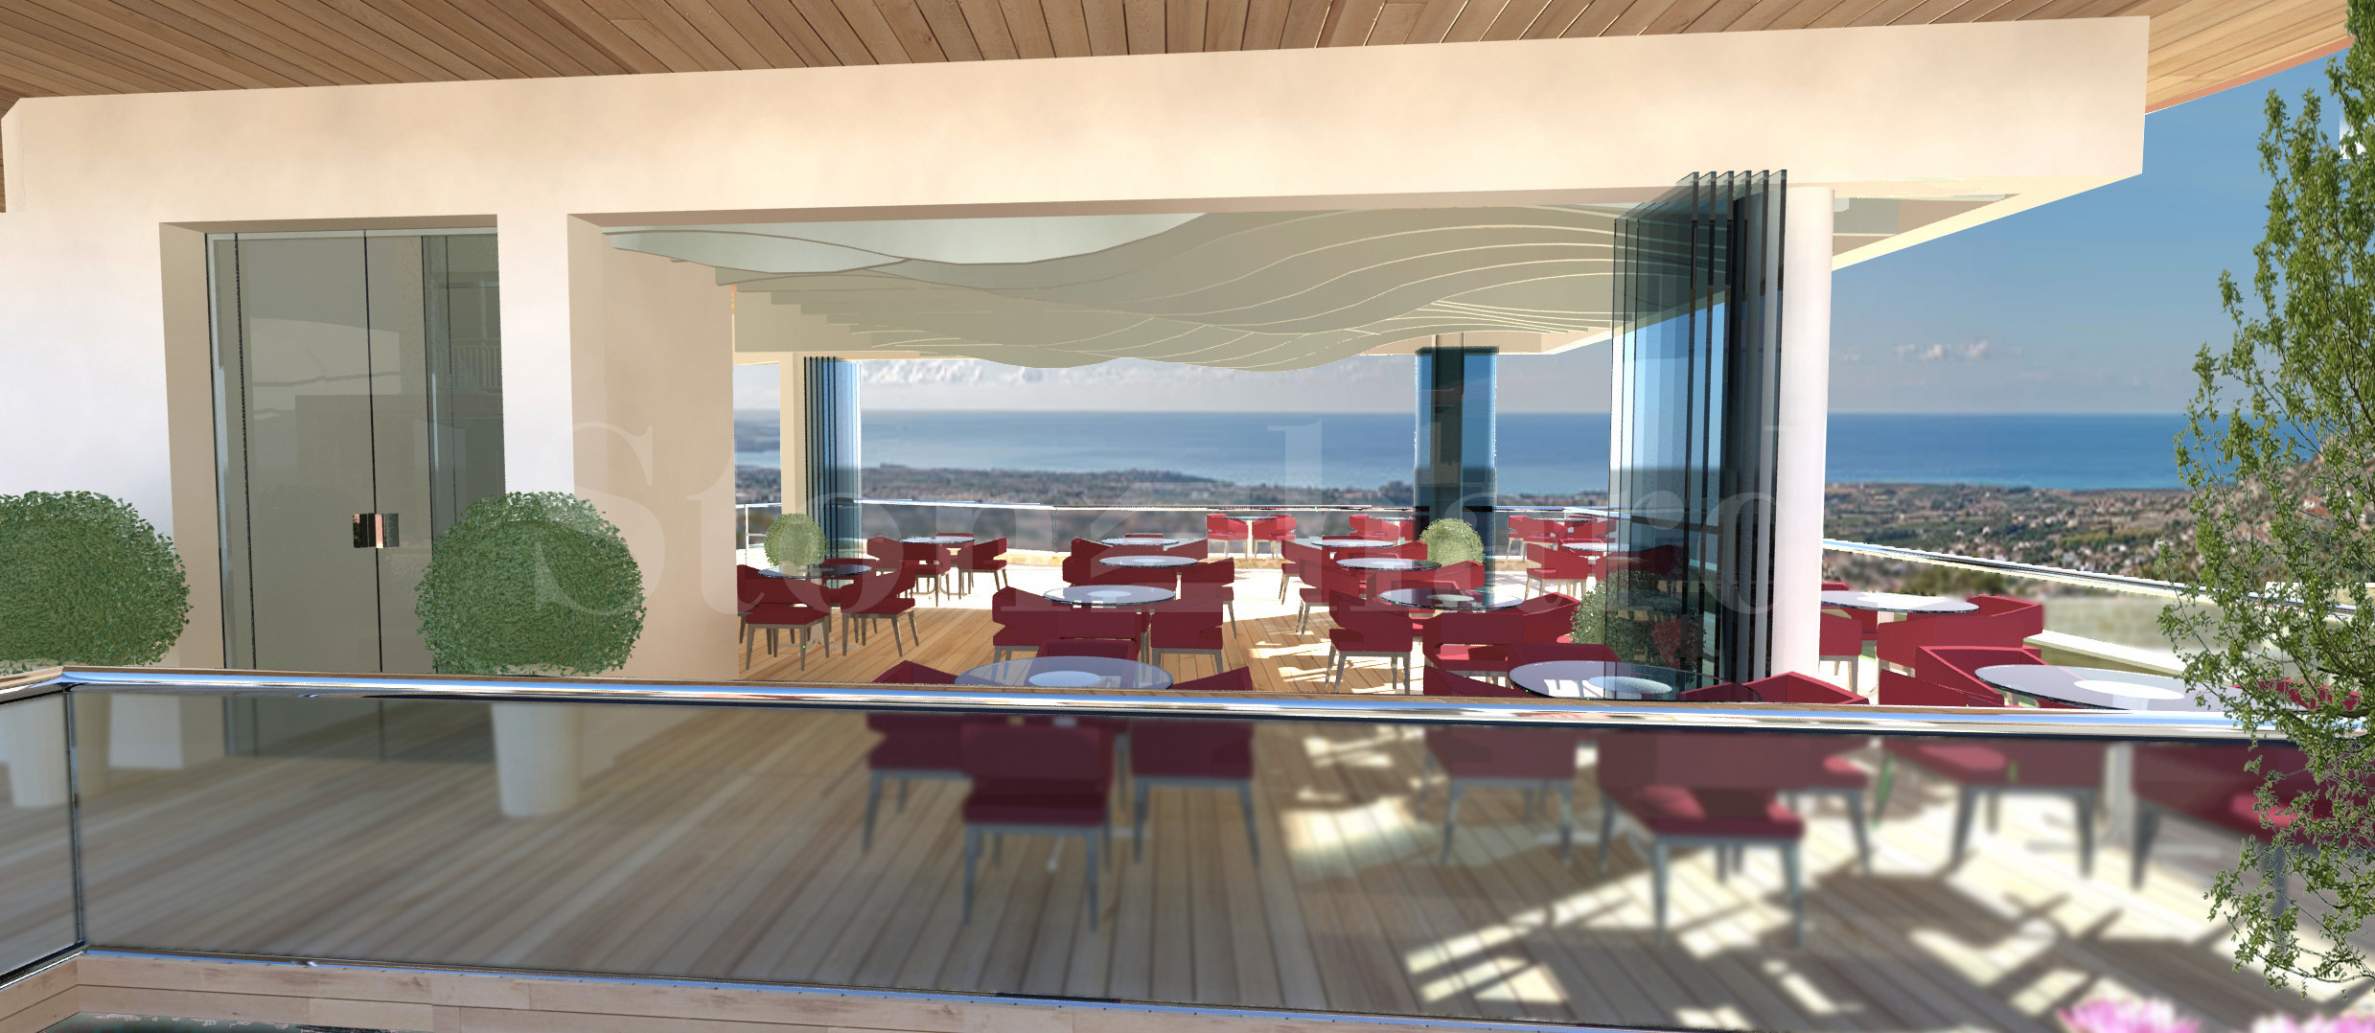 Exclusive villas with panoramic sea views2 - Stonehard